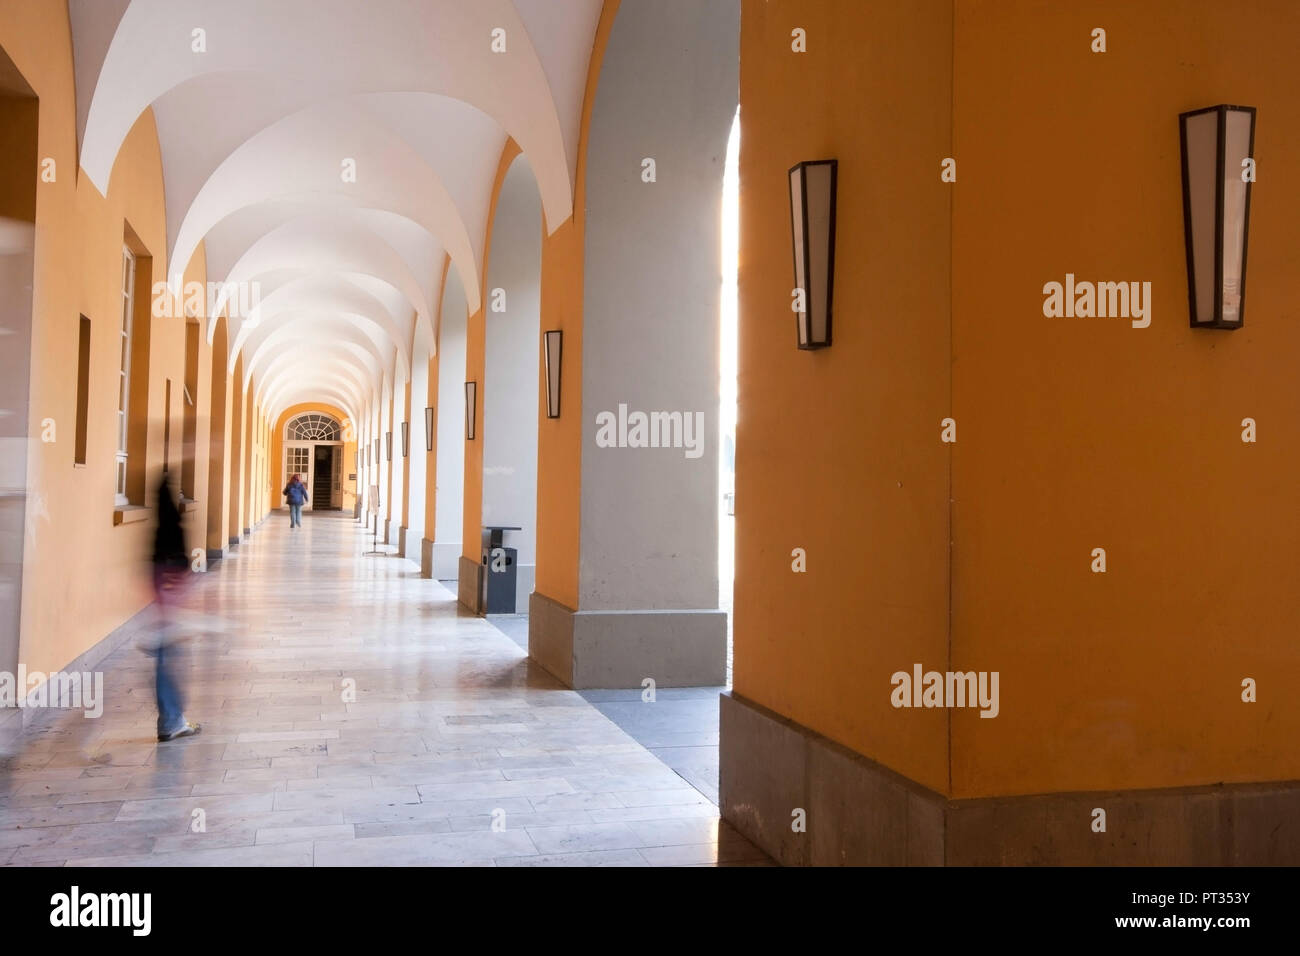 Hallway of atrium, at University Bonn, Germany, Long exposure with moving people, Stock Photo